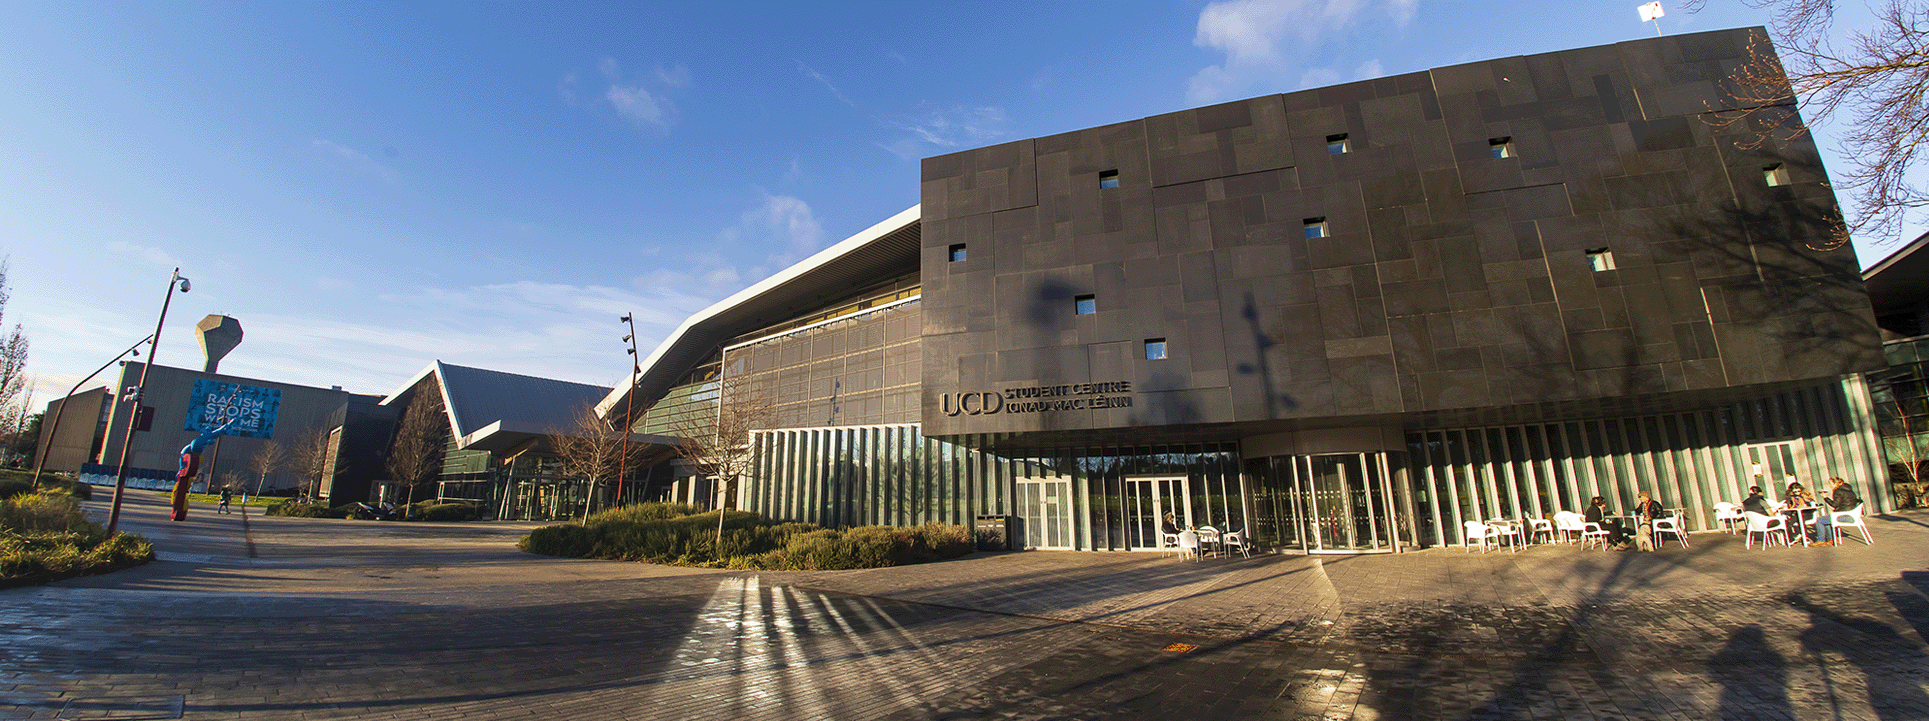 UCD Student Centre building